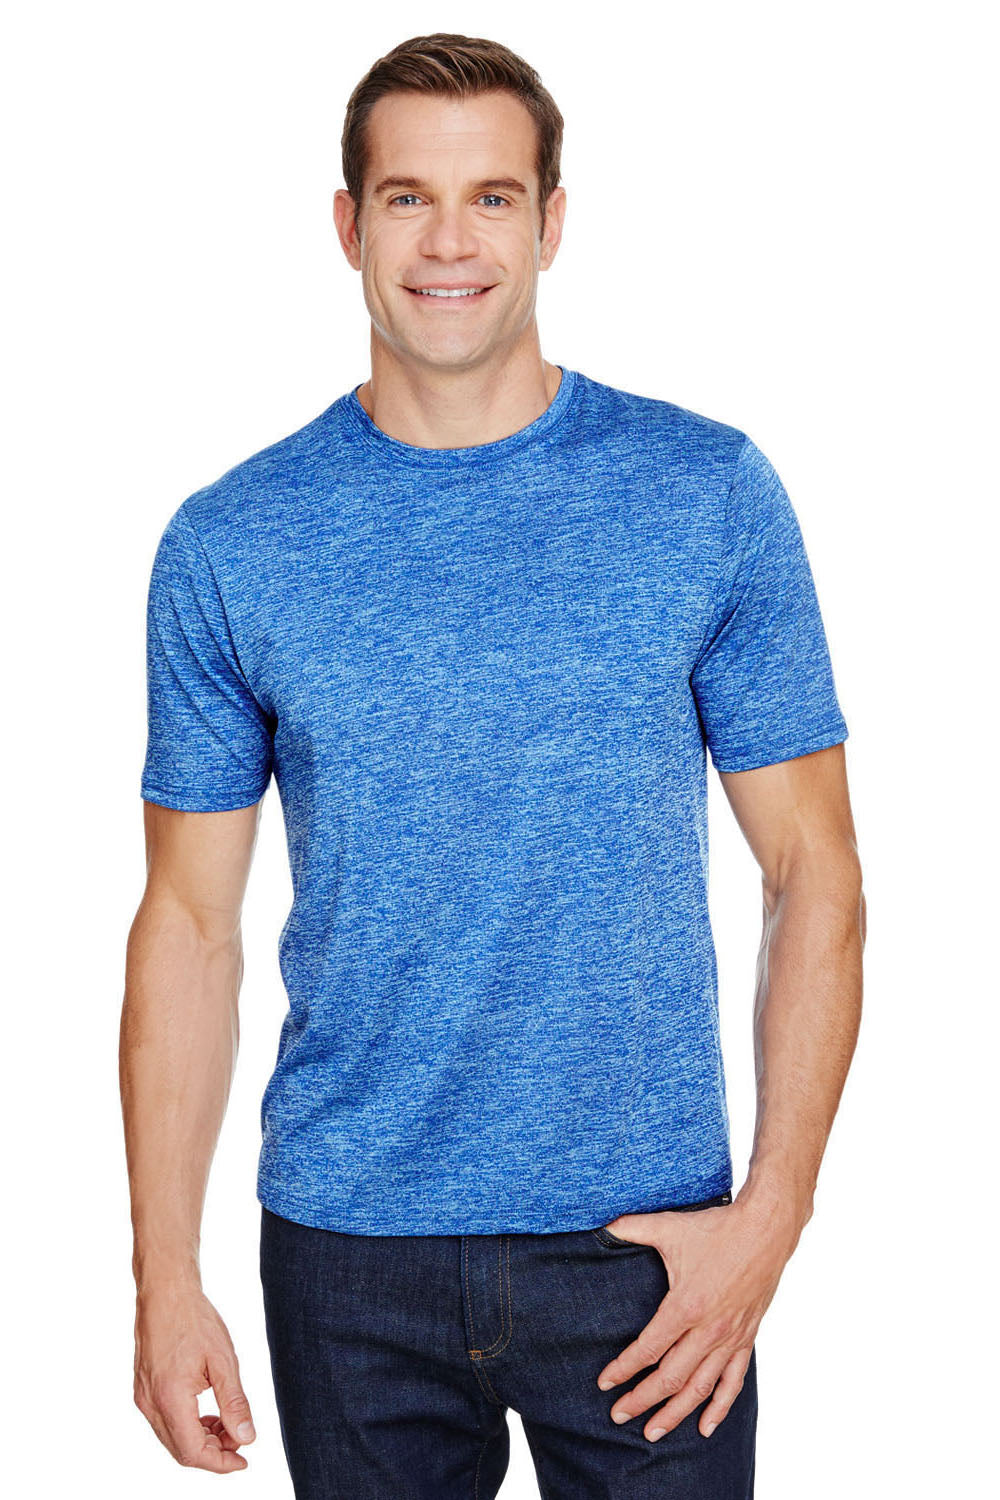 A4 N3010 Mens Tonal Space Dye Crewneck Short Sleeve T-Shirt Light Blue Front